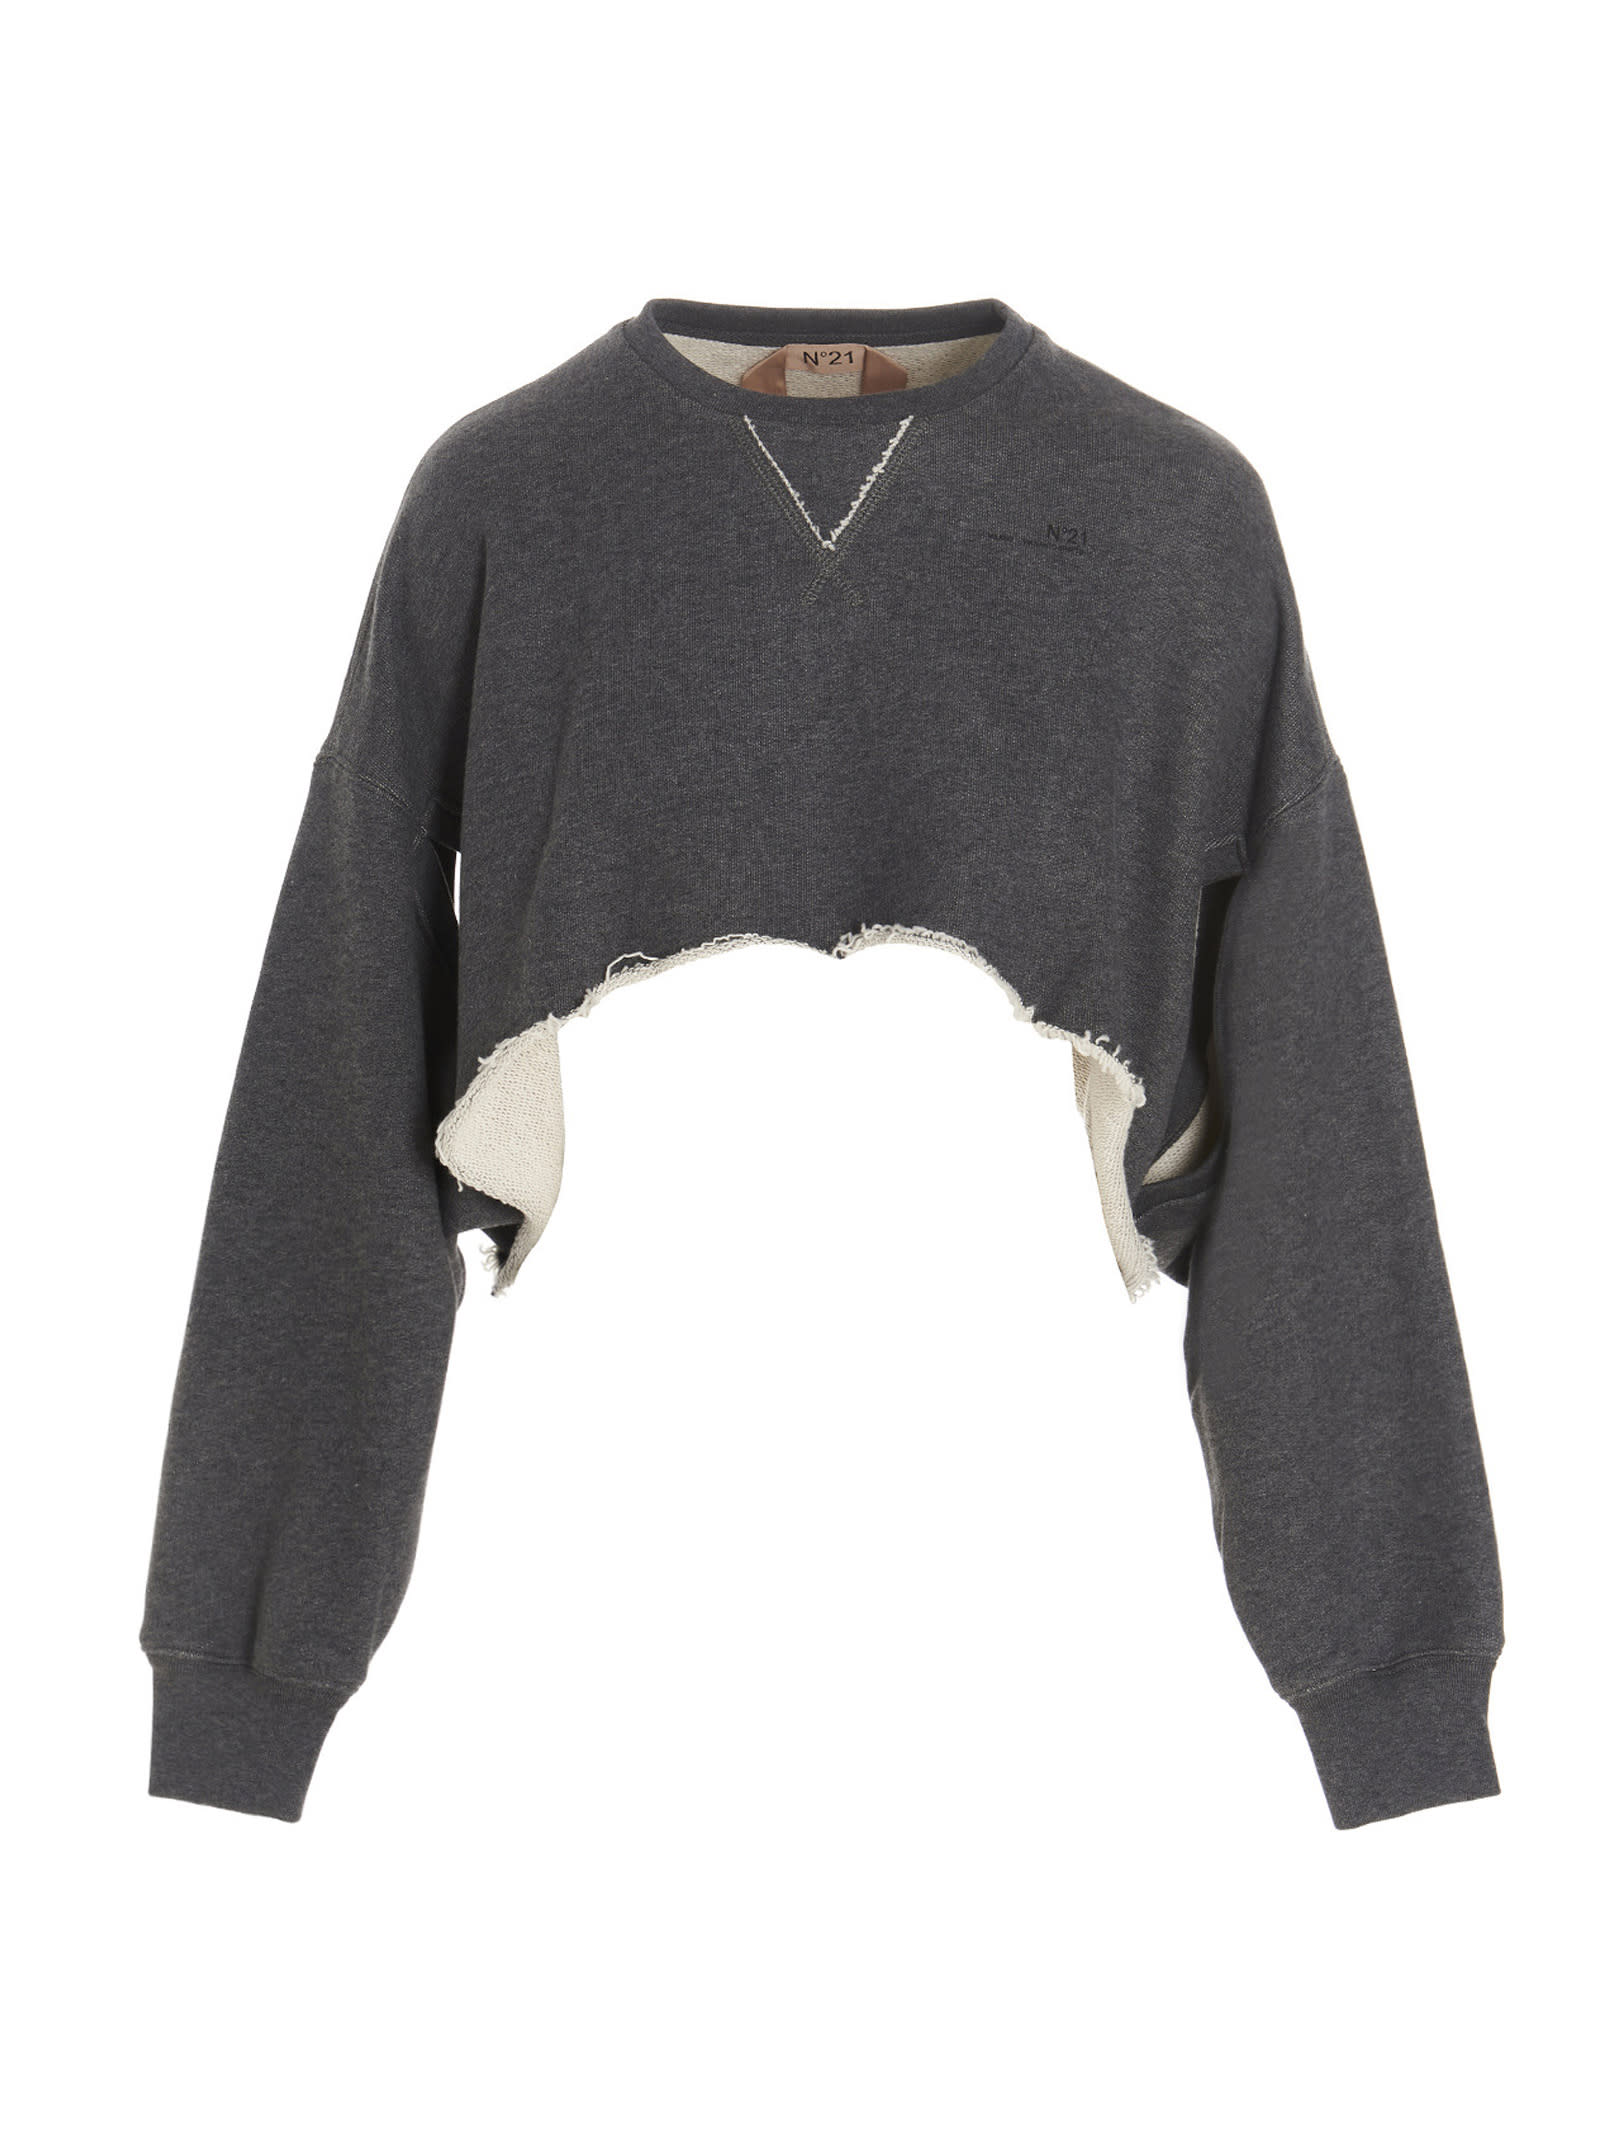 N.21 Cropped Cotton Sweatshirt